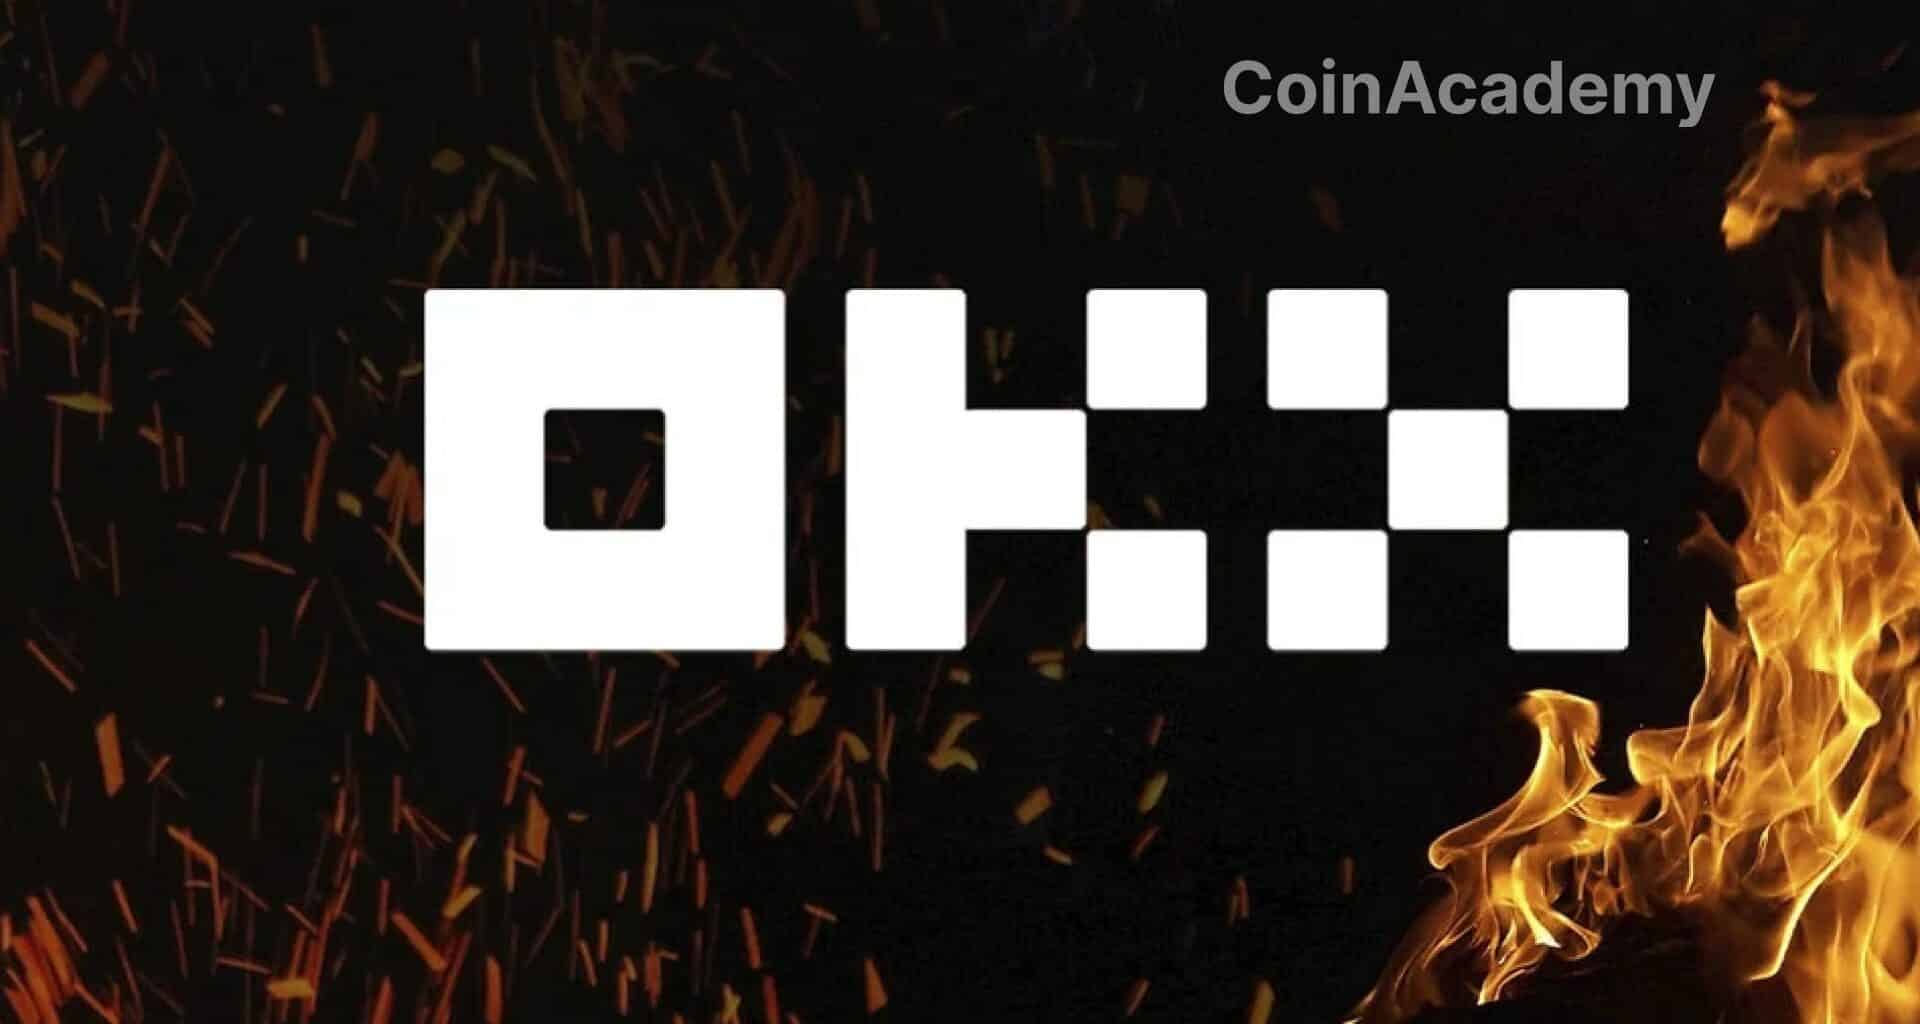 okx okb tokens burn